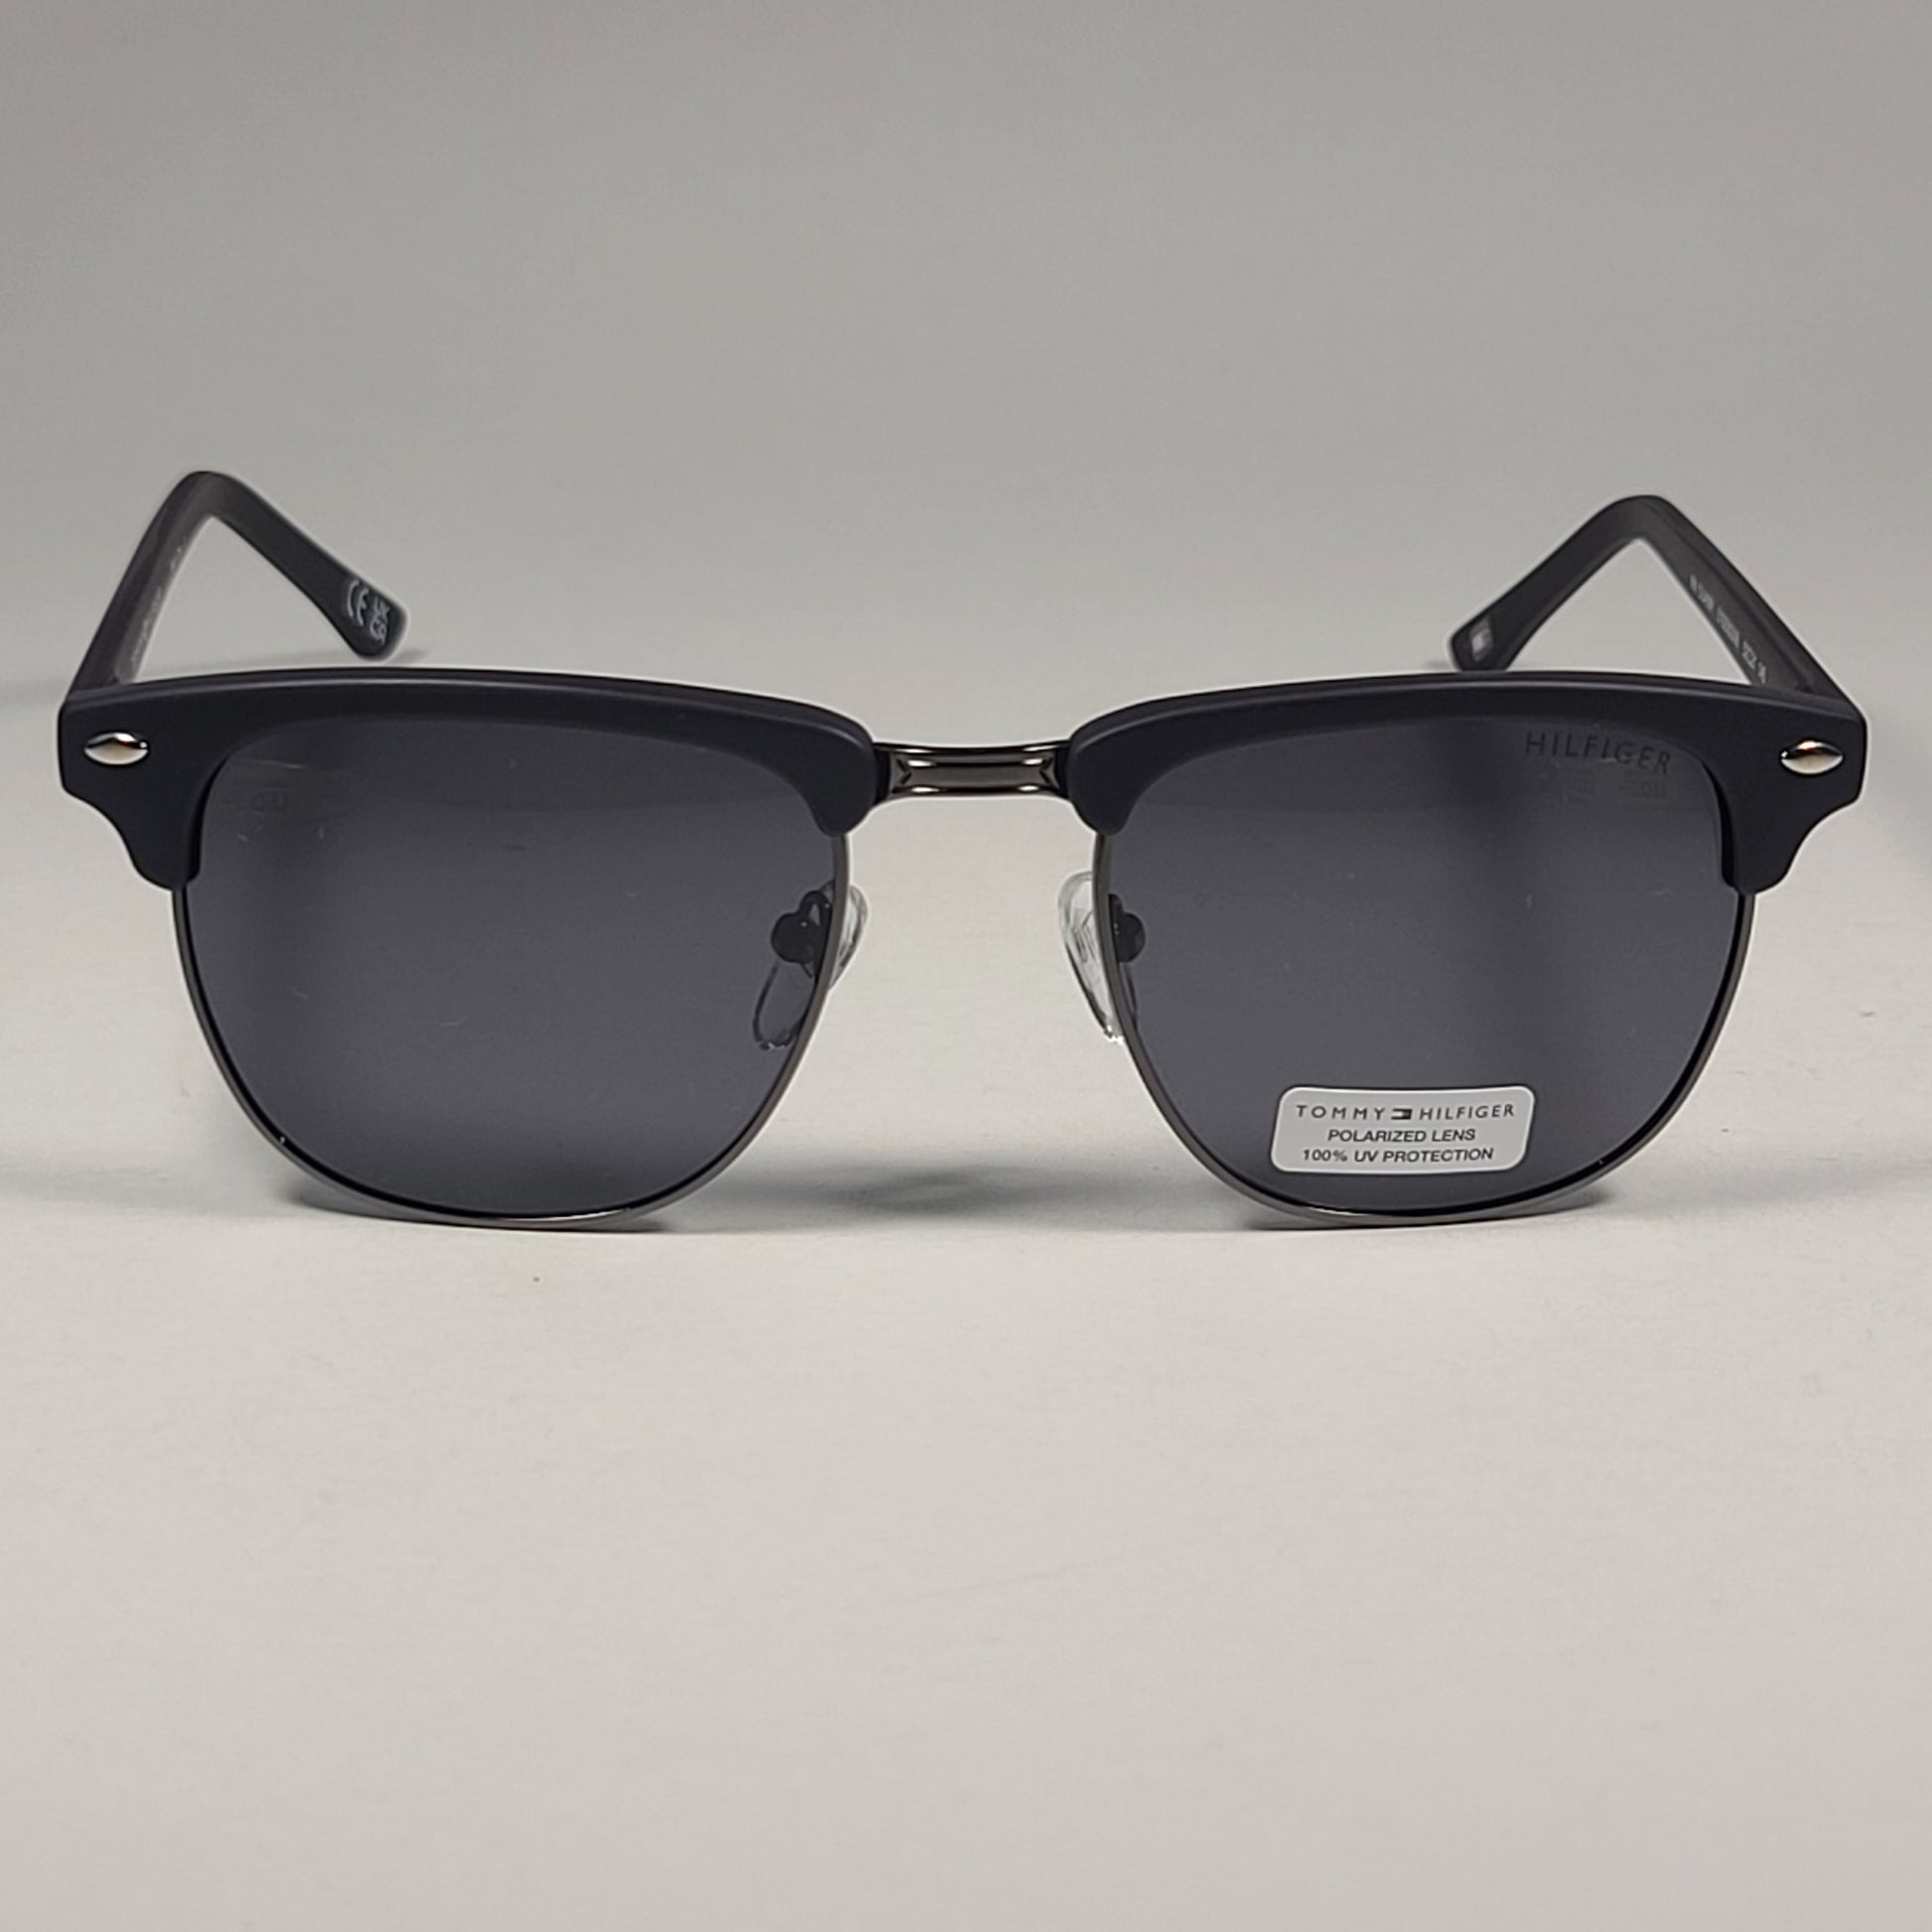 Tommy Hilfiger ’Buckley’ Polarized MM OU468P Square Club Sunglasses Matte Black - Sunglasses